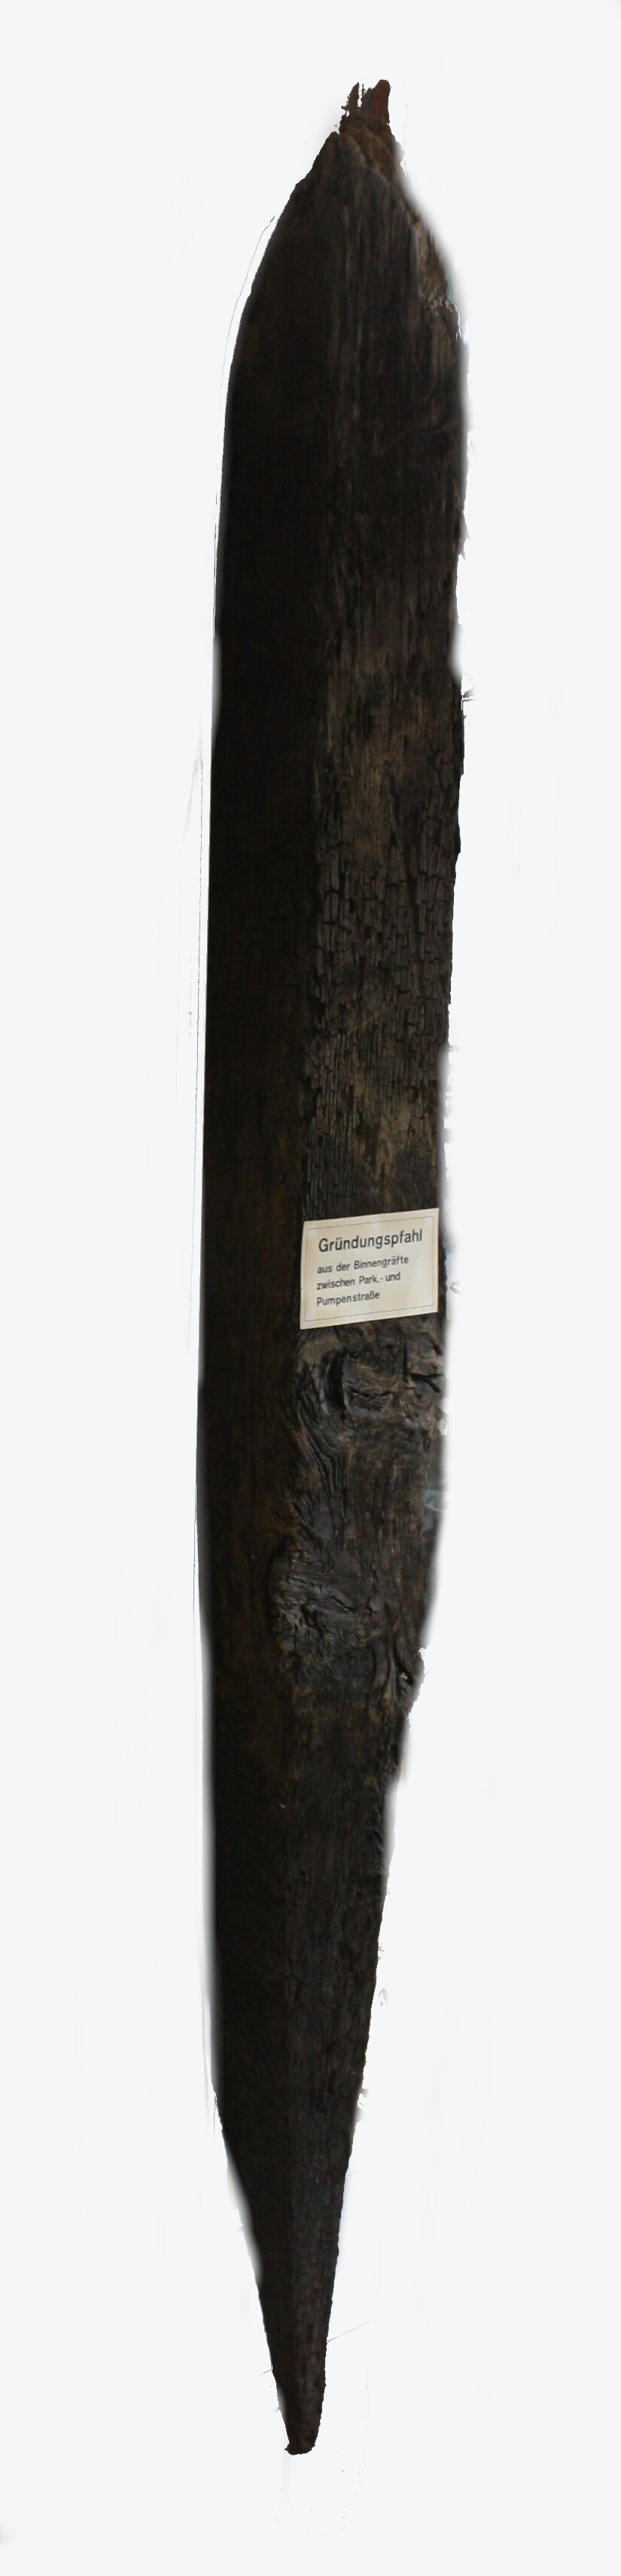 Gründungspfahl (Drilandmuseum CC BY-NC-SA)